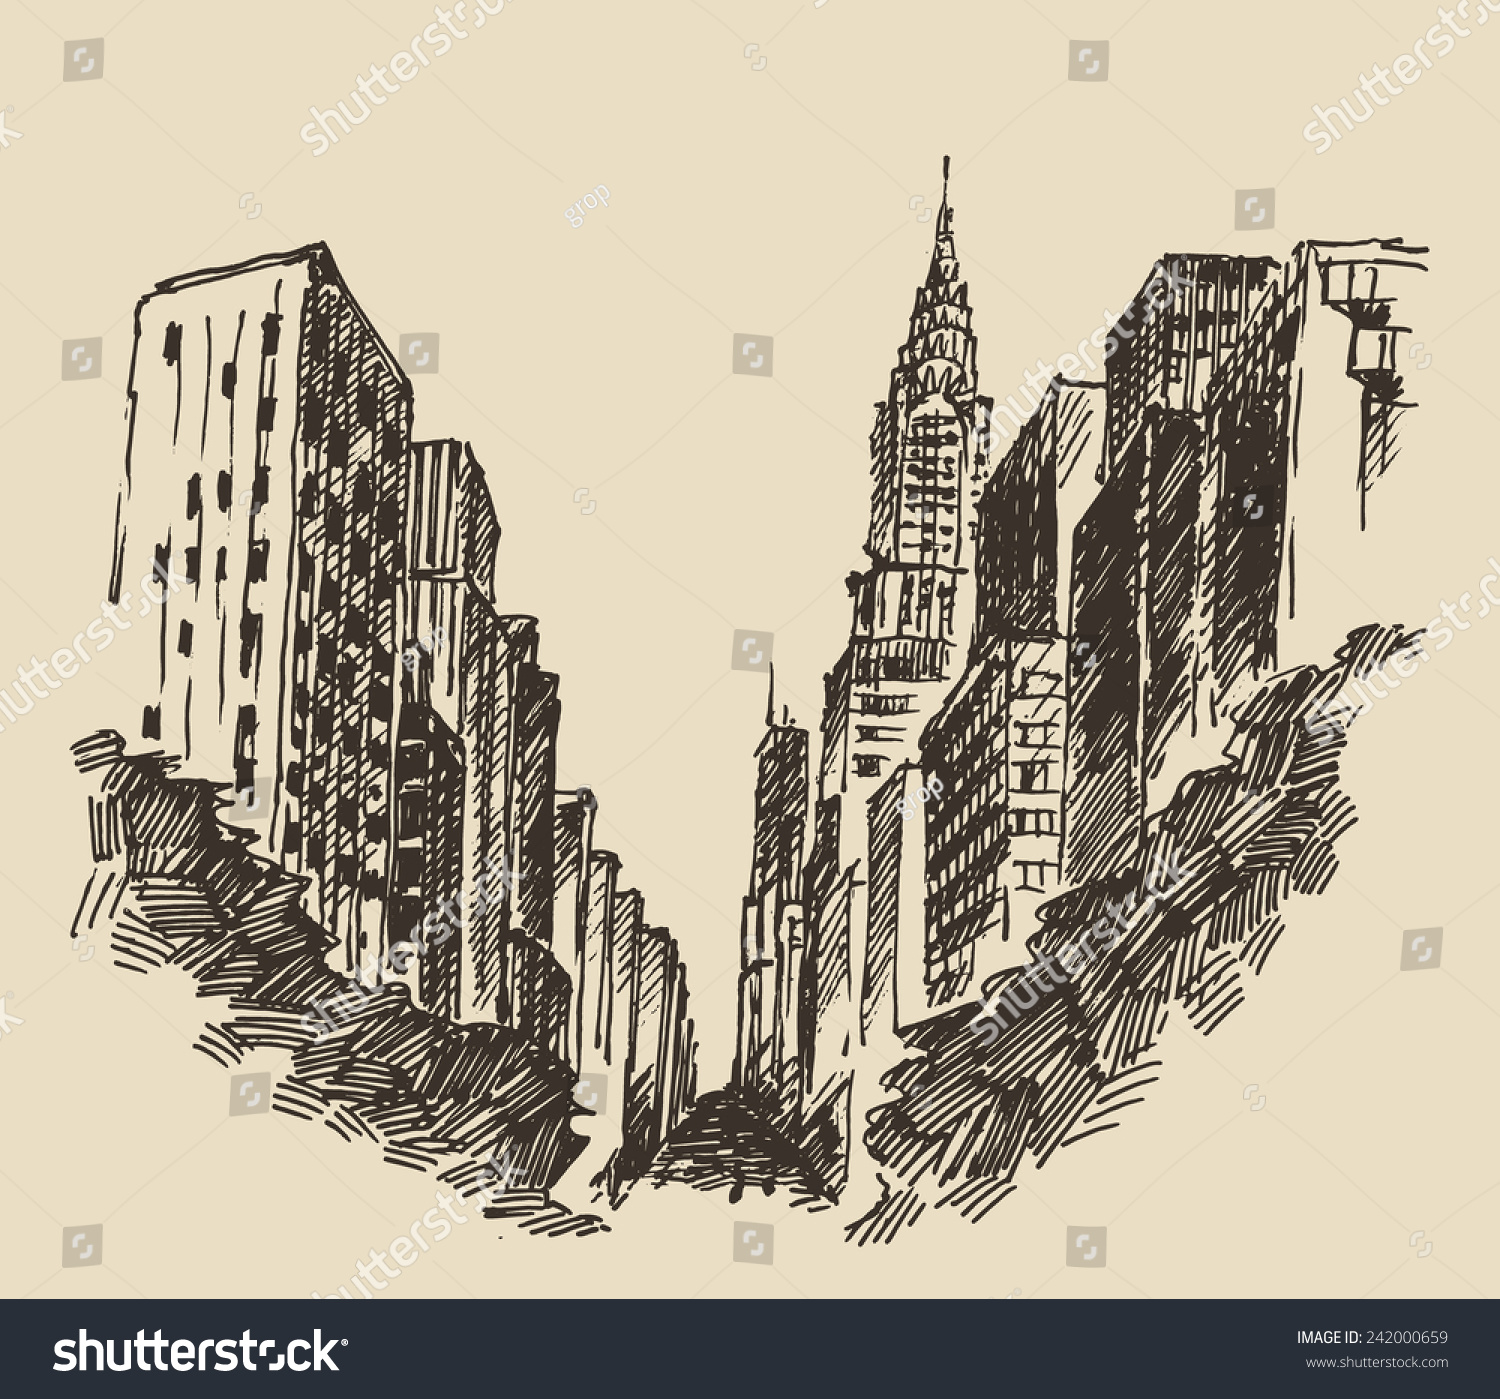 SVG of New York city engraving vector illustration, hand drawn svg